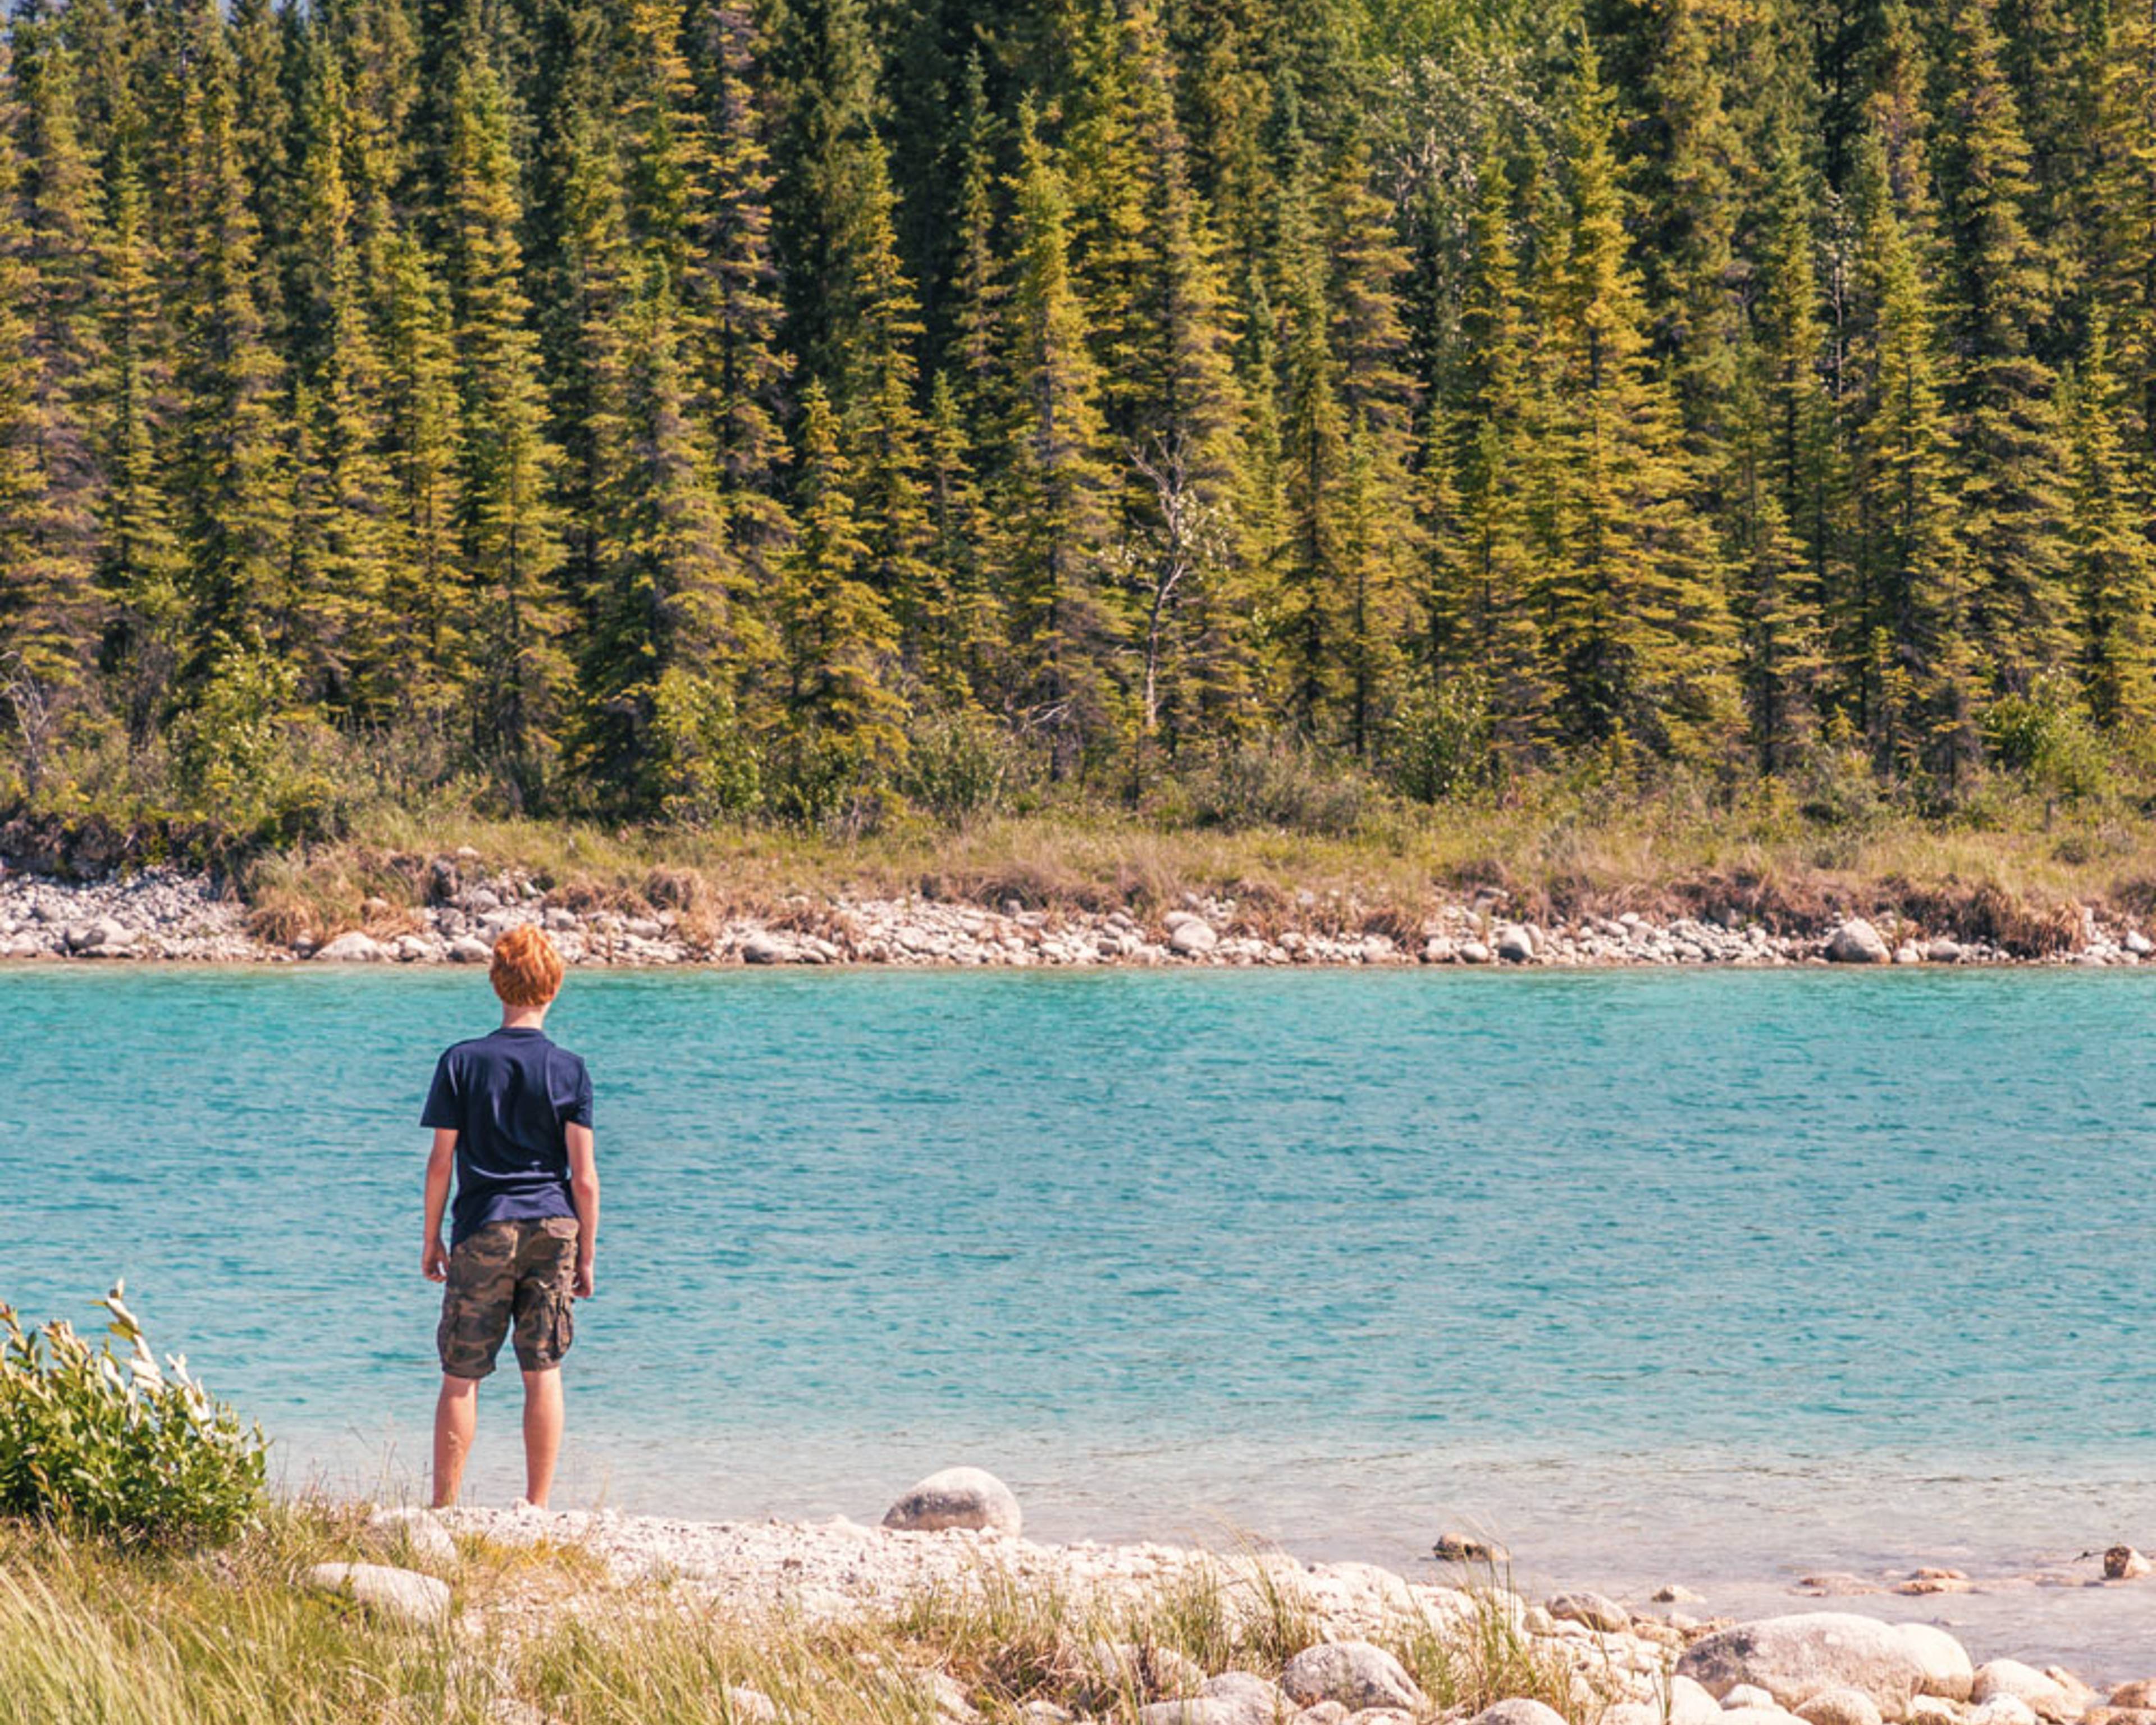 Viajes de naturaleza a Canadá - Viajes a medida para disfrutar al aire libre